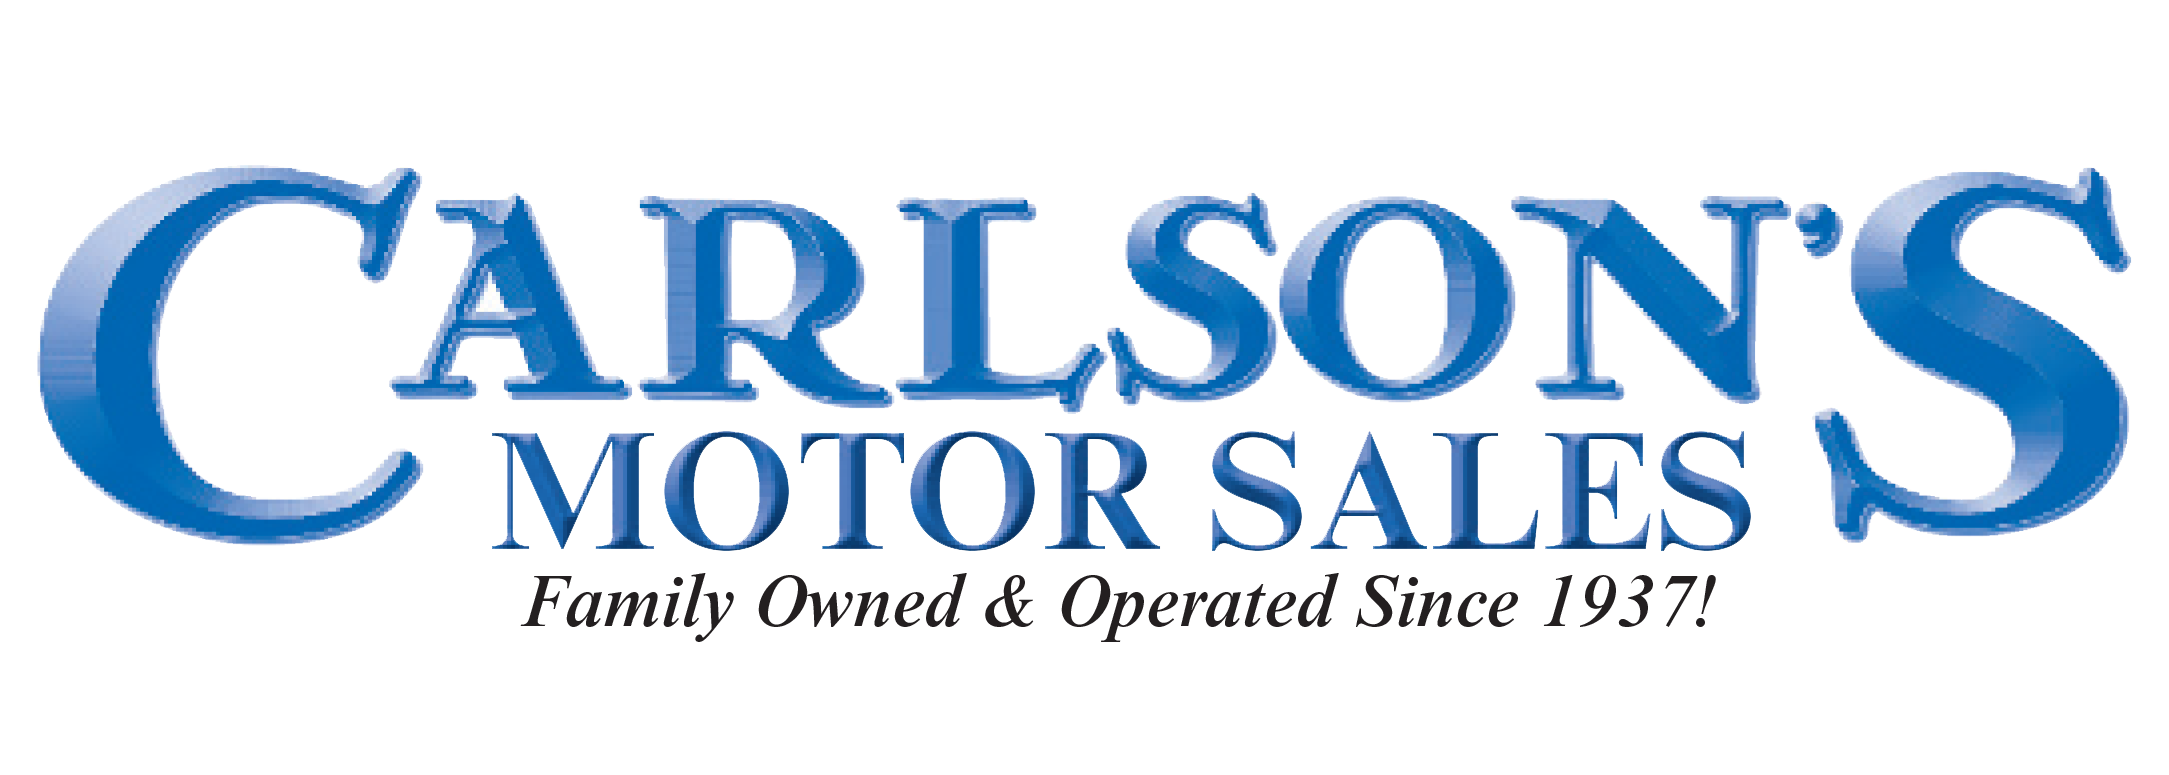 Carlson's Motor Sales